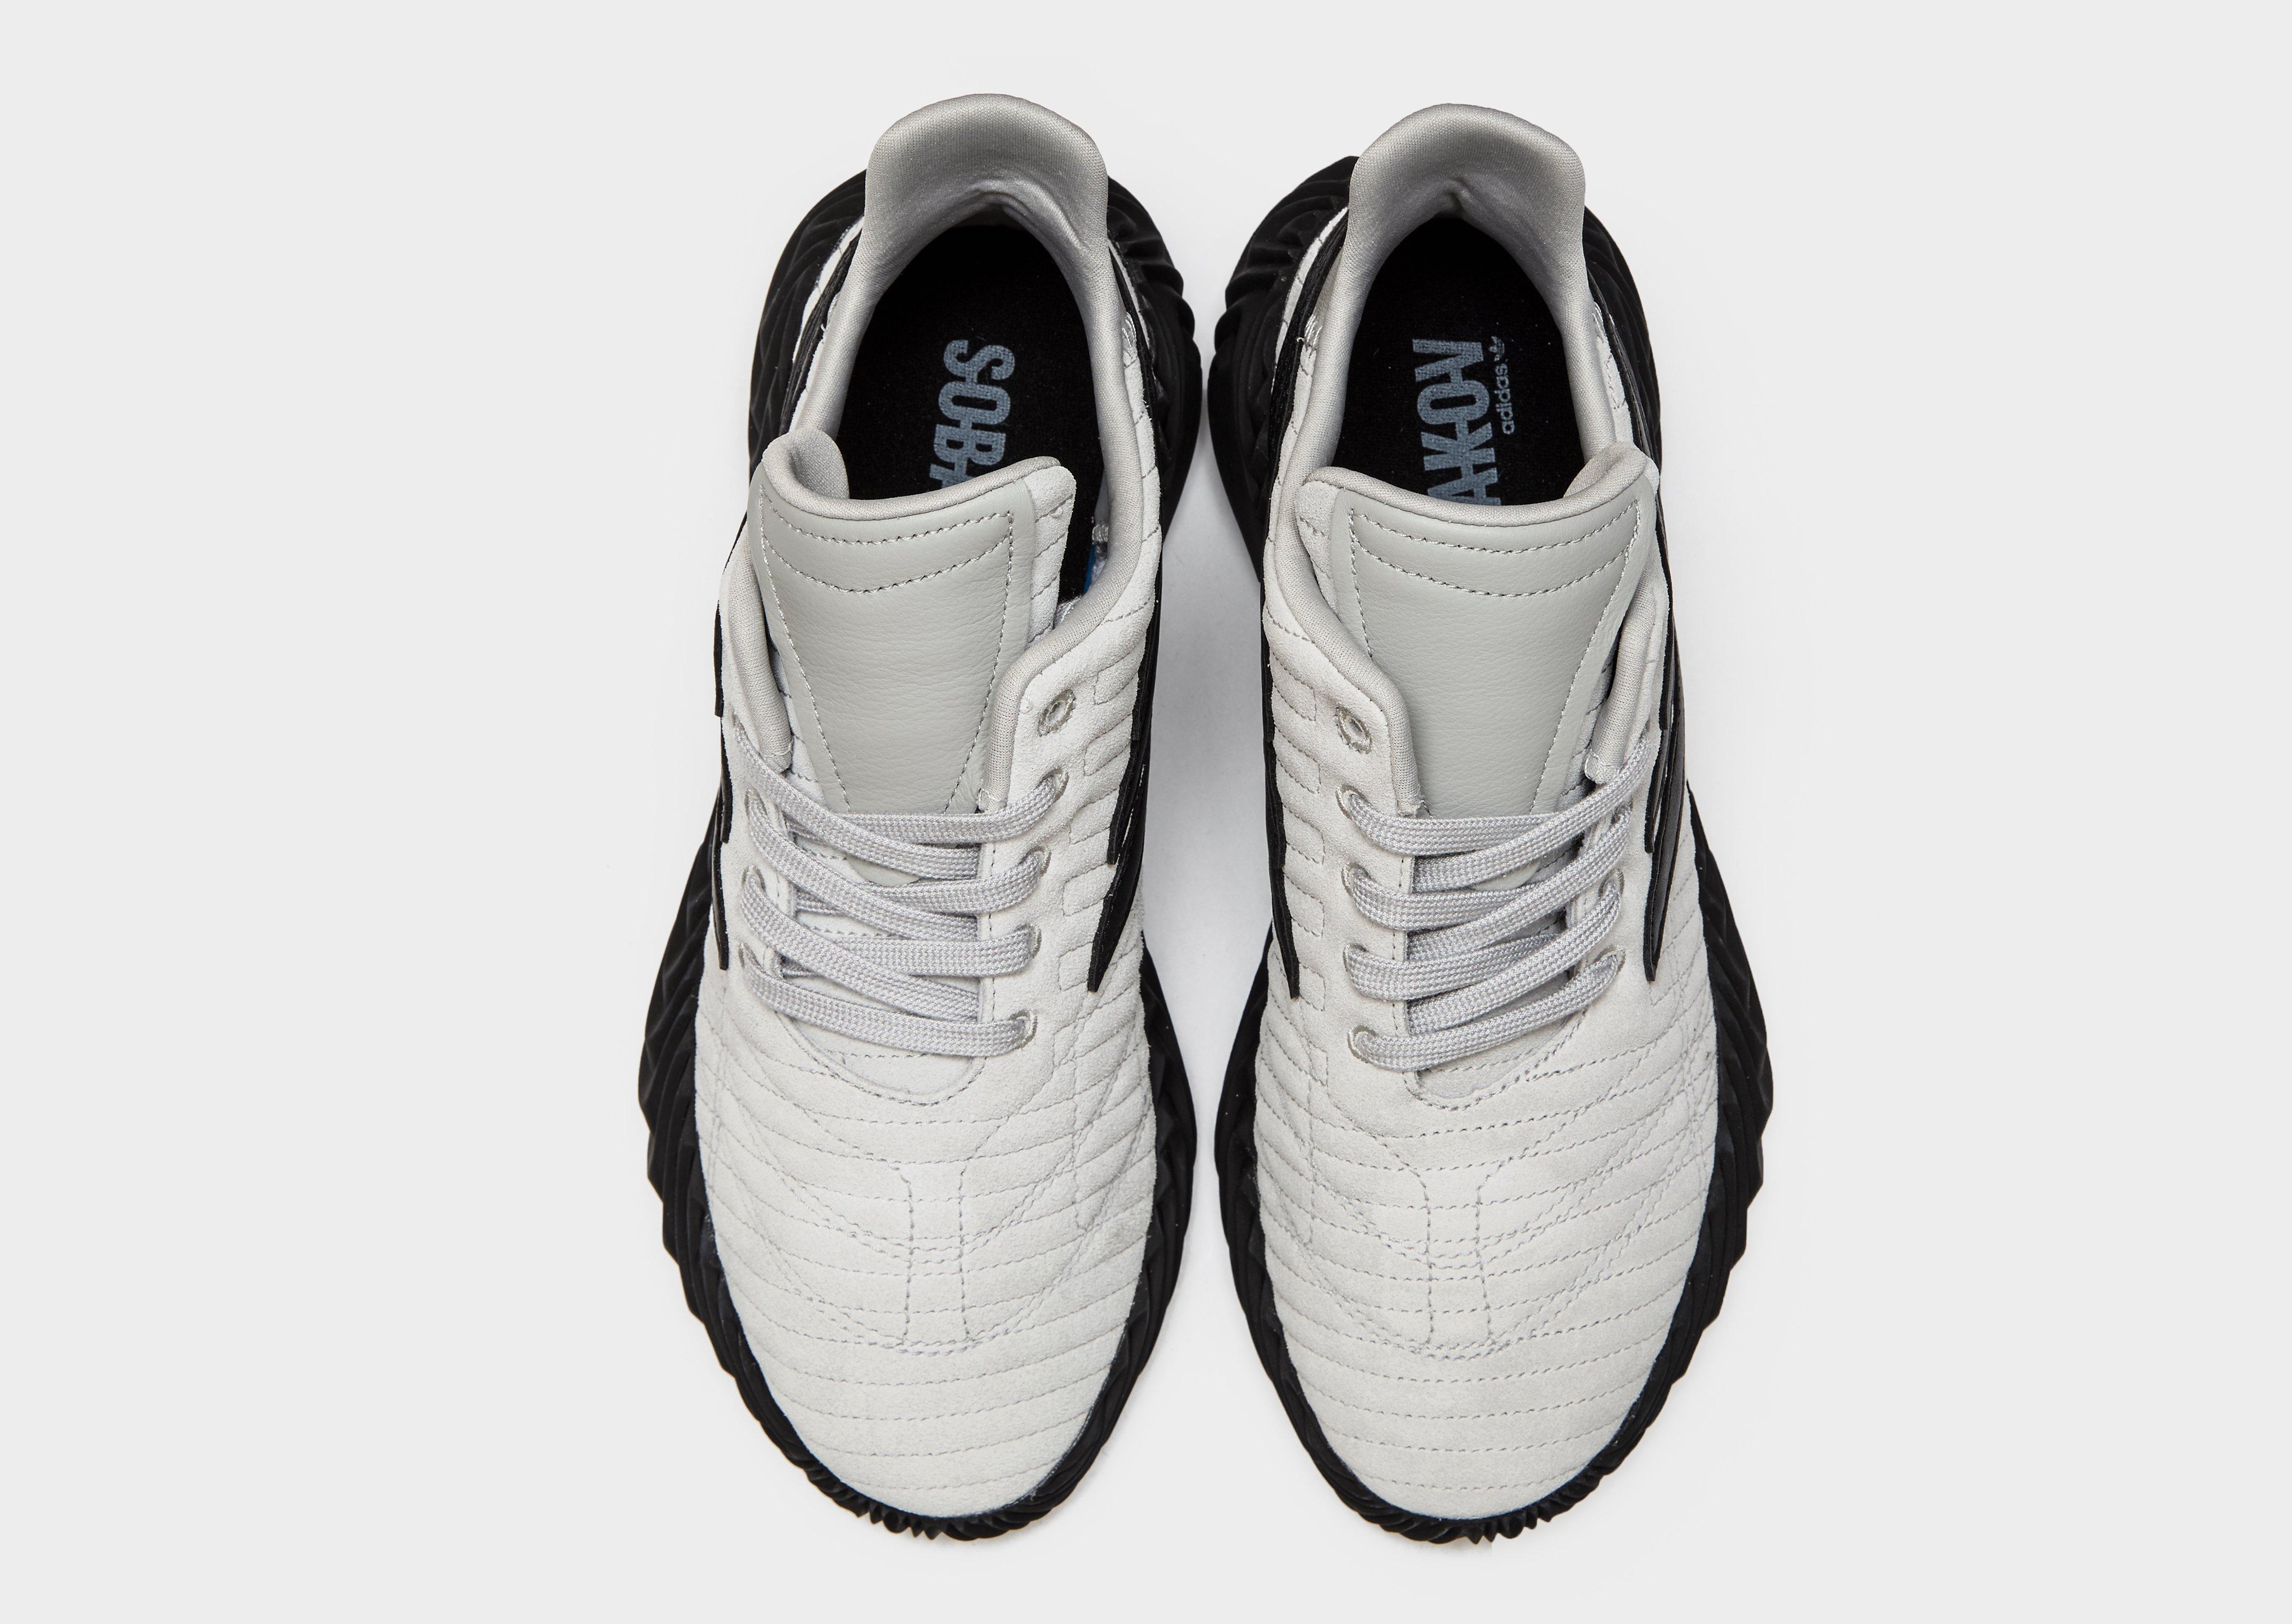 adidas Originals Synthetic Sobakov in Grey/Black (Gray) for Men - Lyst